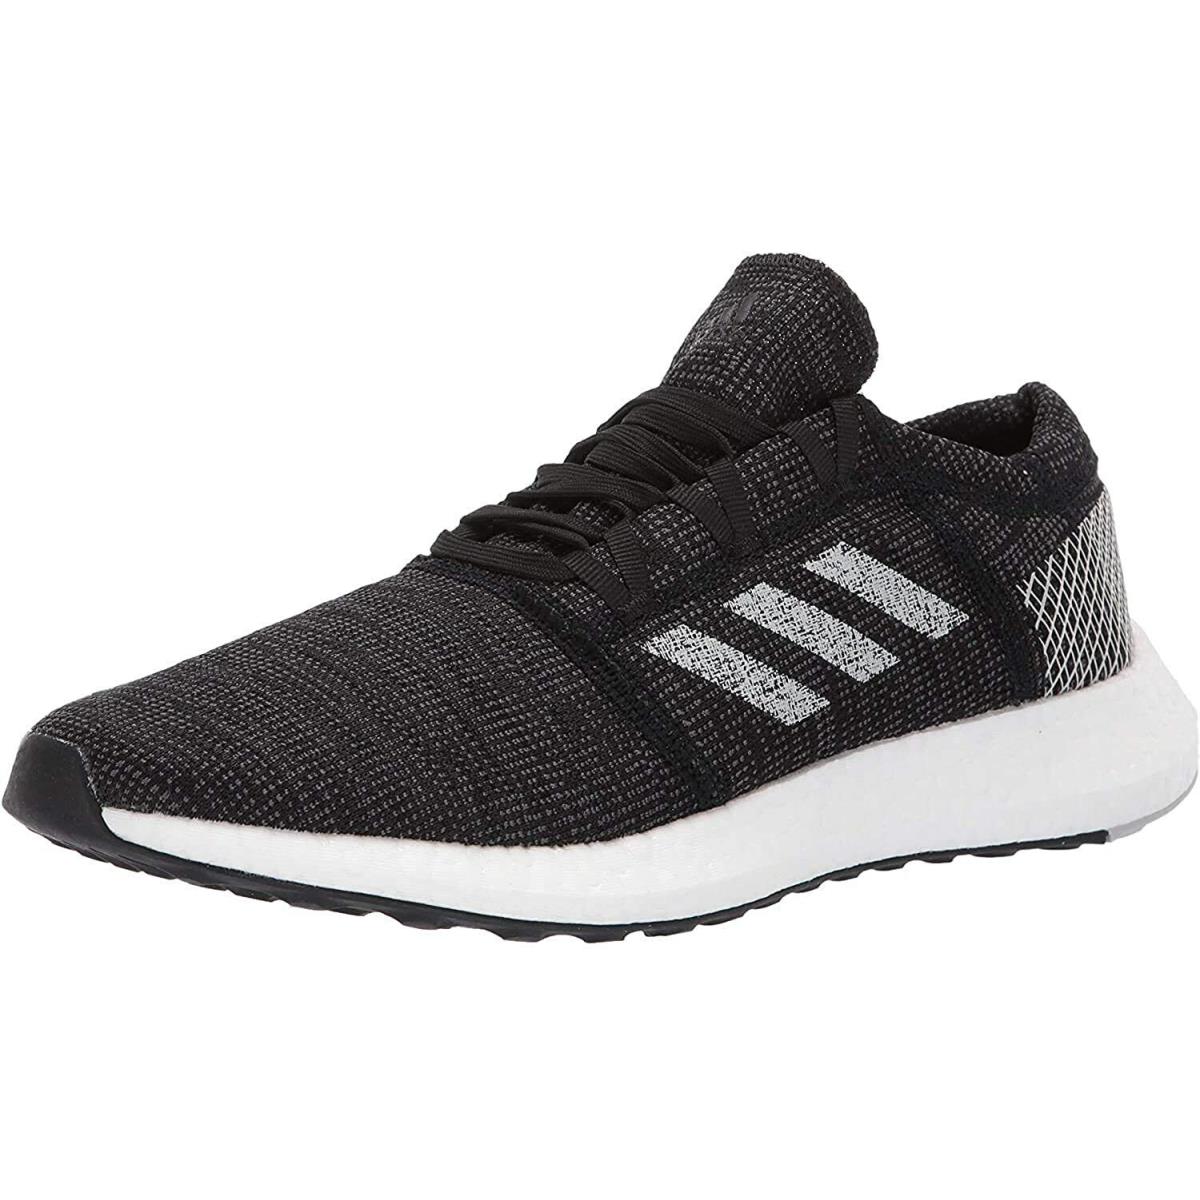 Adidas Mens Pureboost Athletic Running Sneakers Shoes Black/grey US 8M